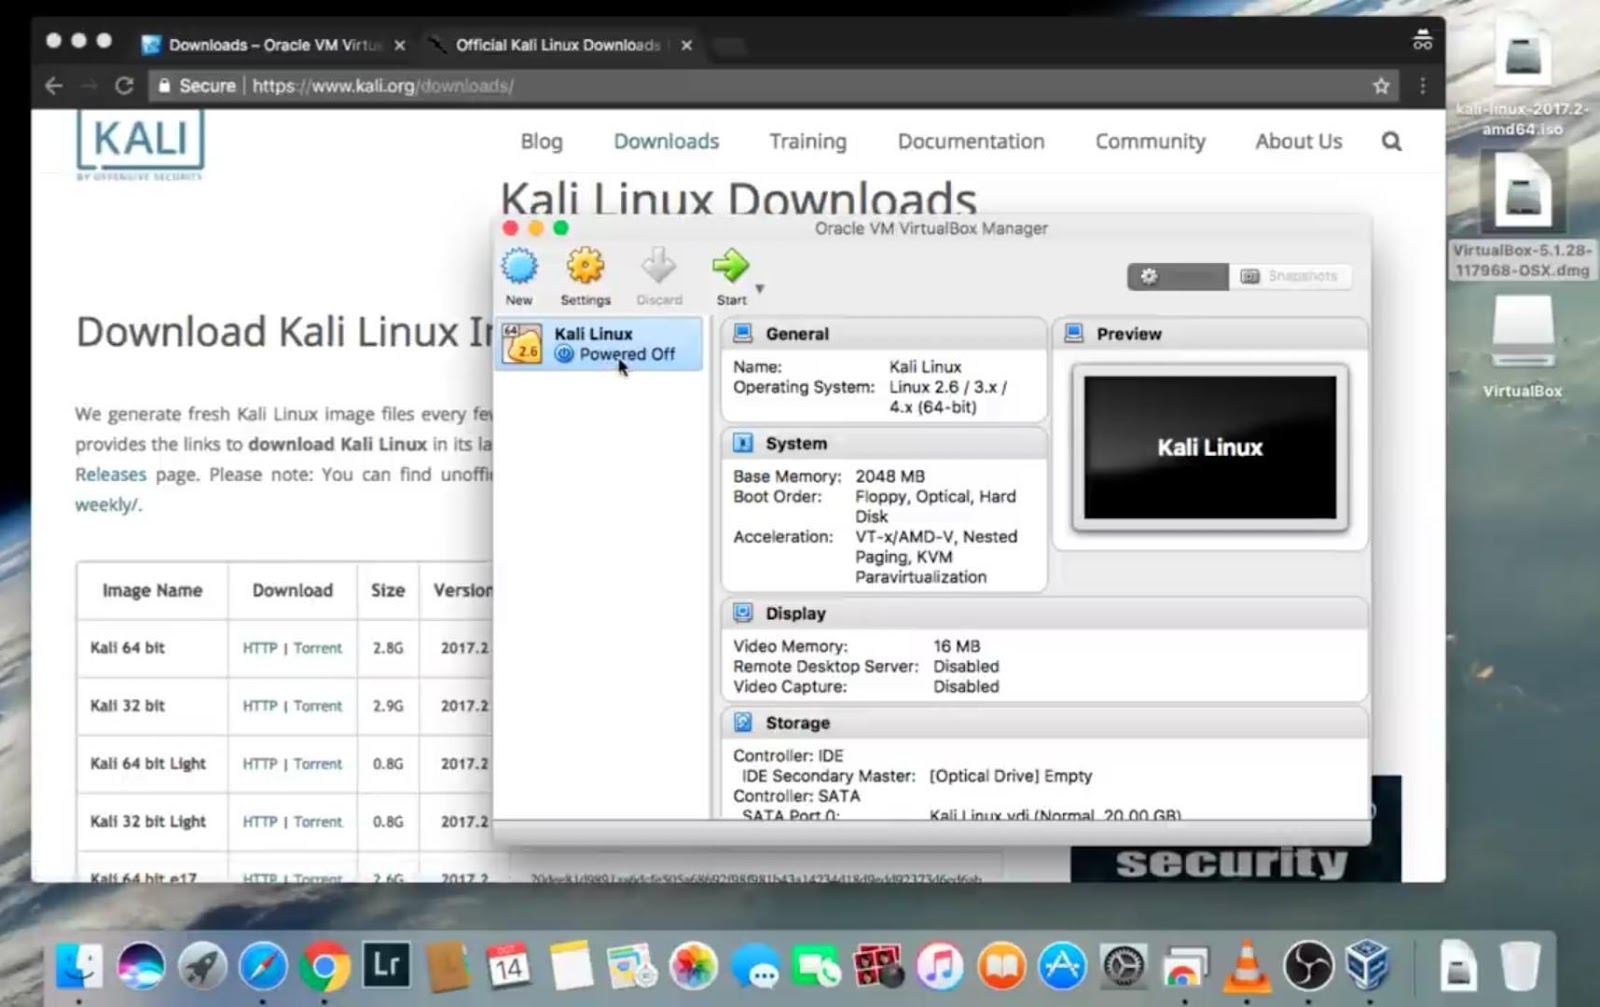 2AhKo3 - How to install Kali Linux on Mac